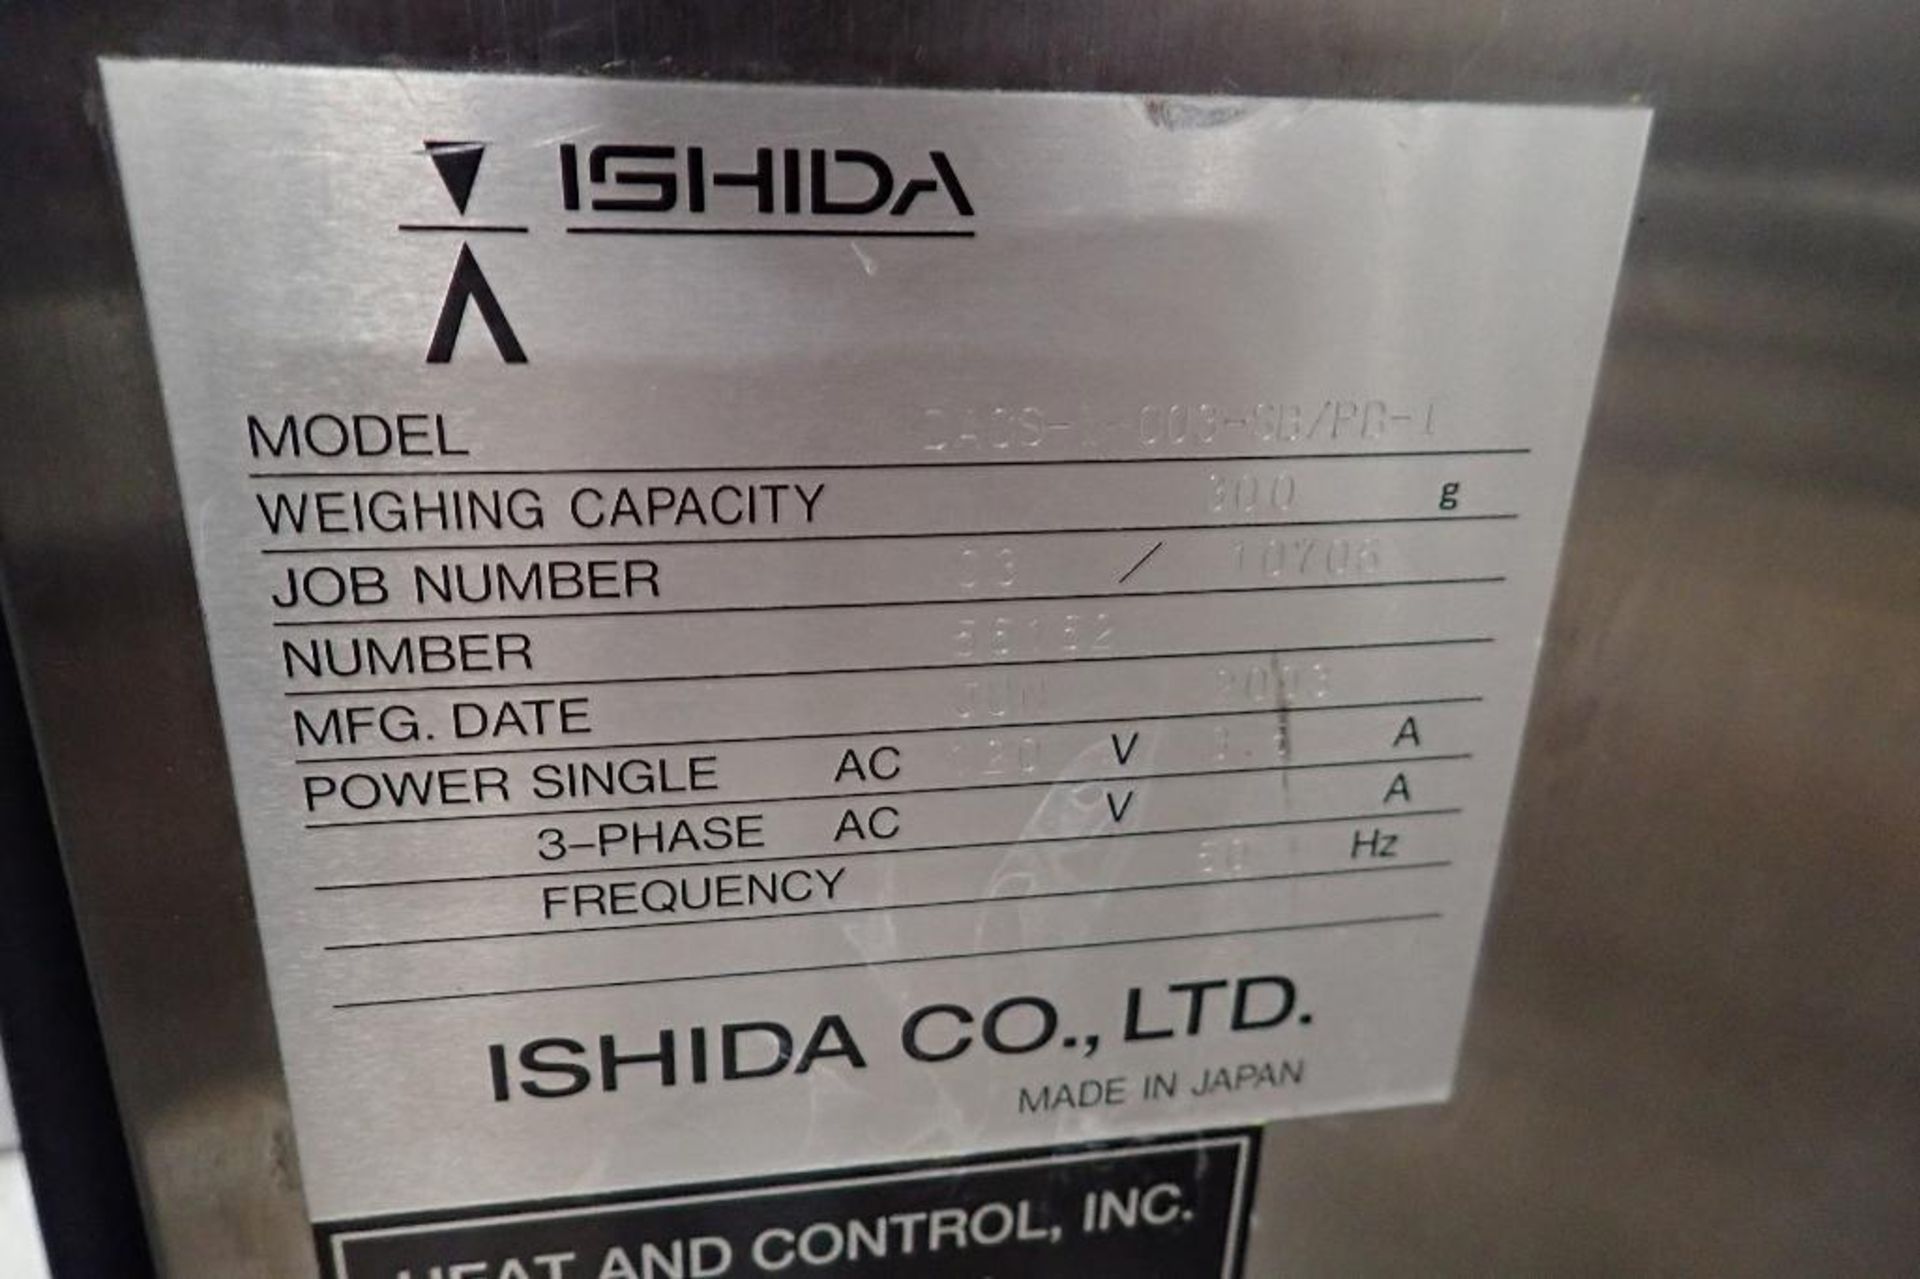 2003 Ishida check weigher, Model DACS-W-003-SB/PB-I, SN 16167, 300 g capacity, 6 in. wide belt. **Ri - Image 7 of 8